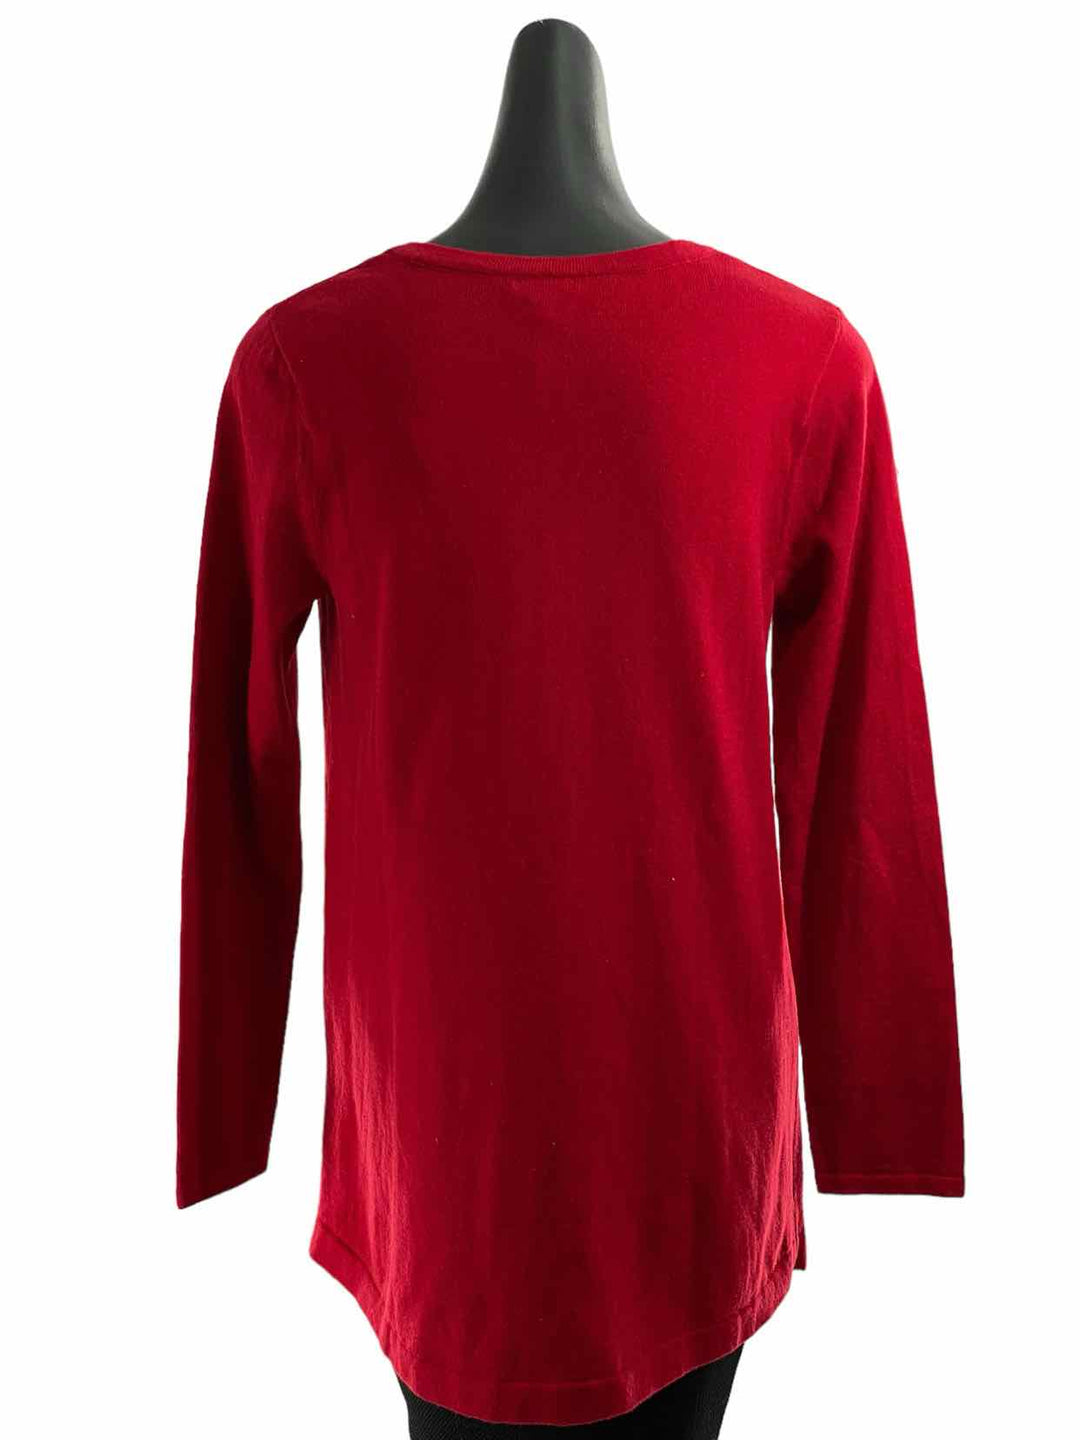 J Jill Size S Red Sweater